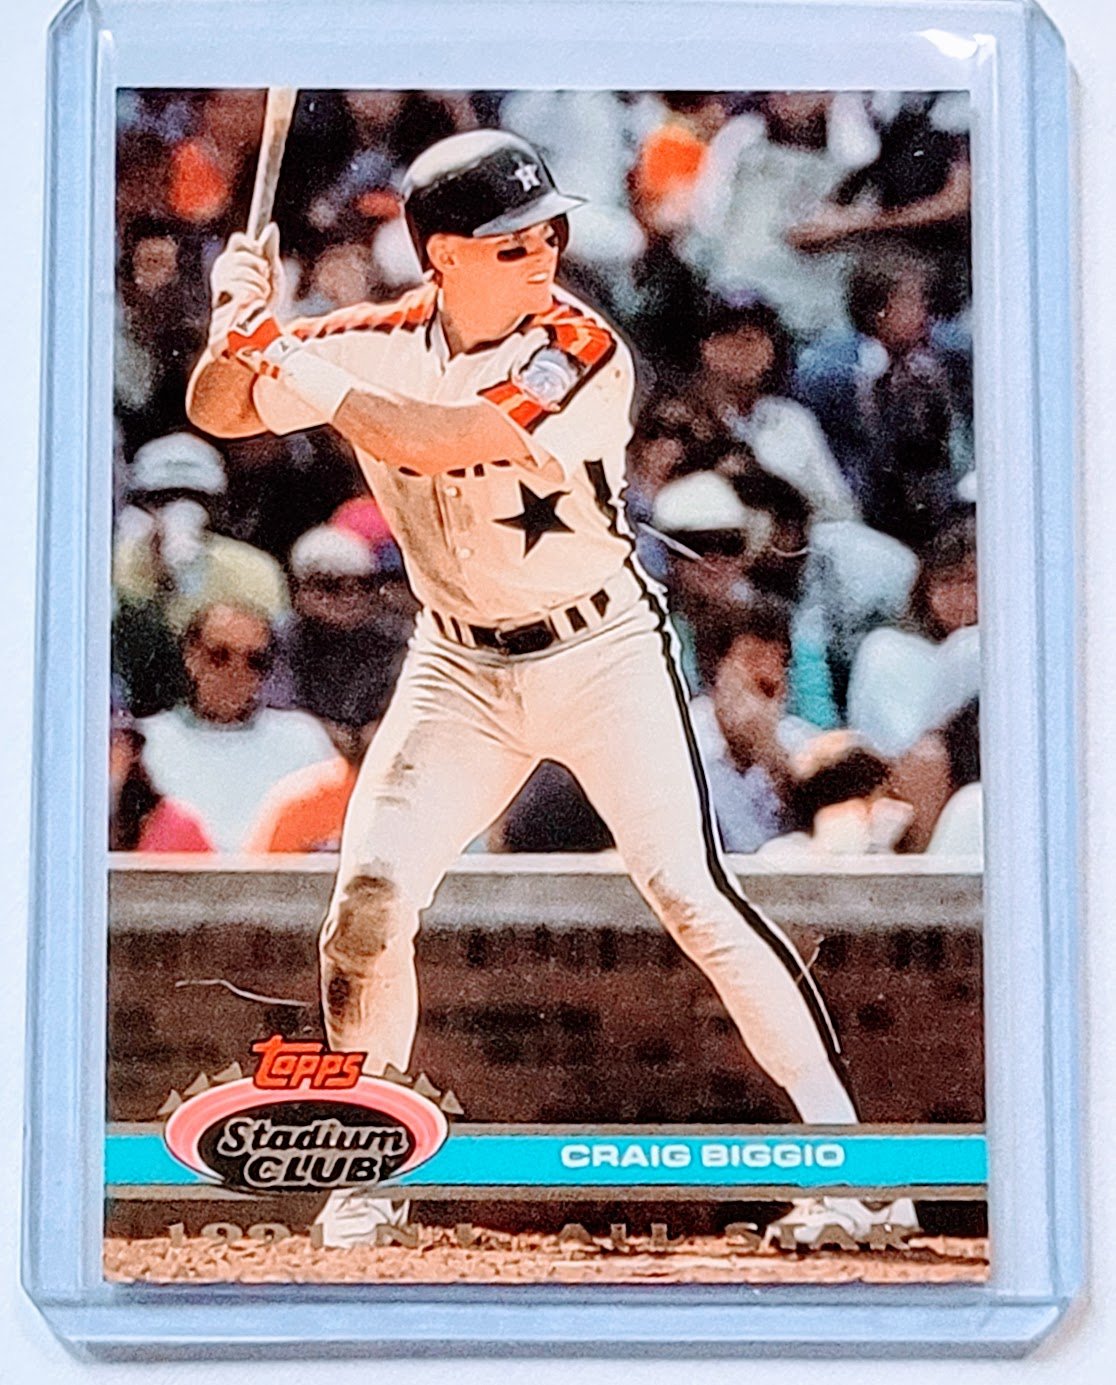 1992 Topps Stadium Club Dome Craig Biggio 1991 All Star MLB Baseball Trading Card TPTV simple Xclusive Collectibles   